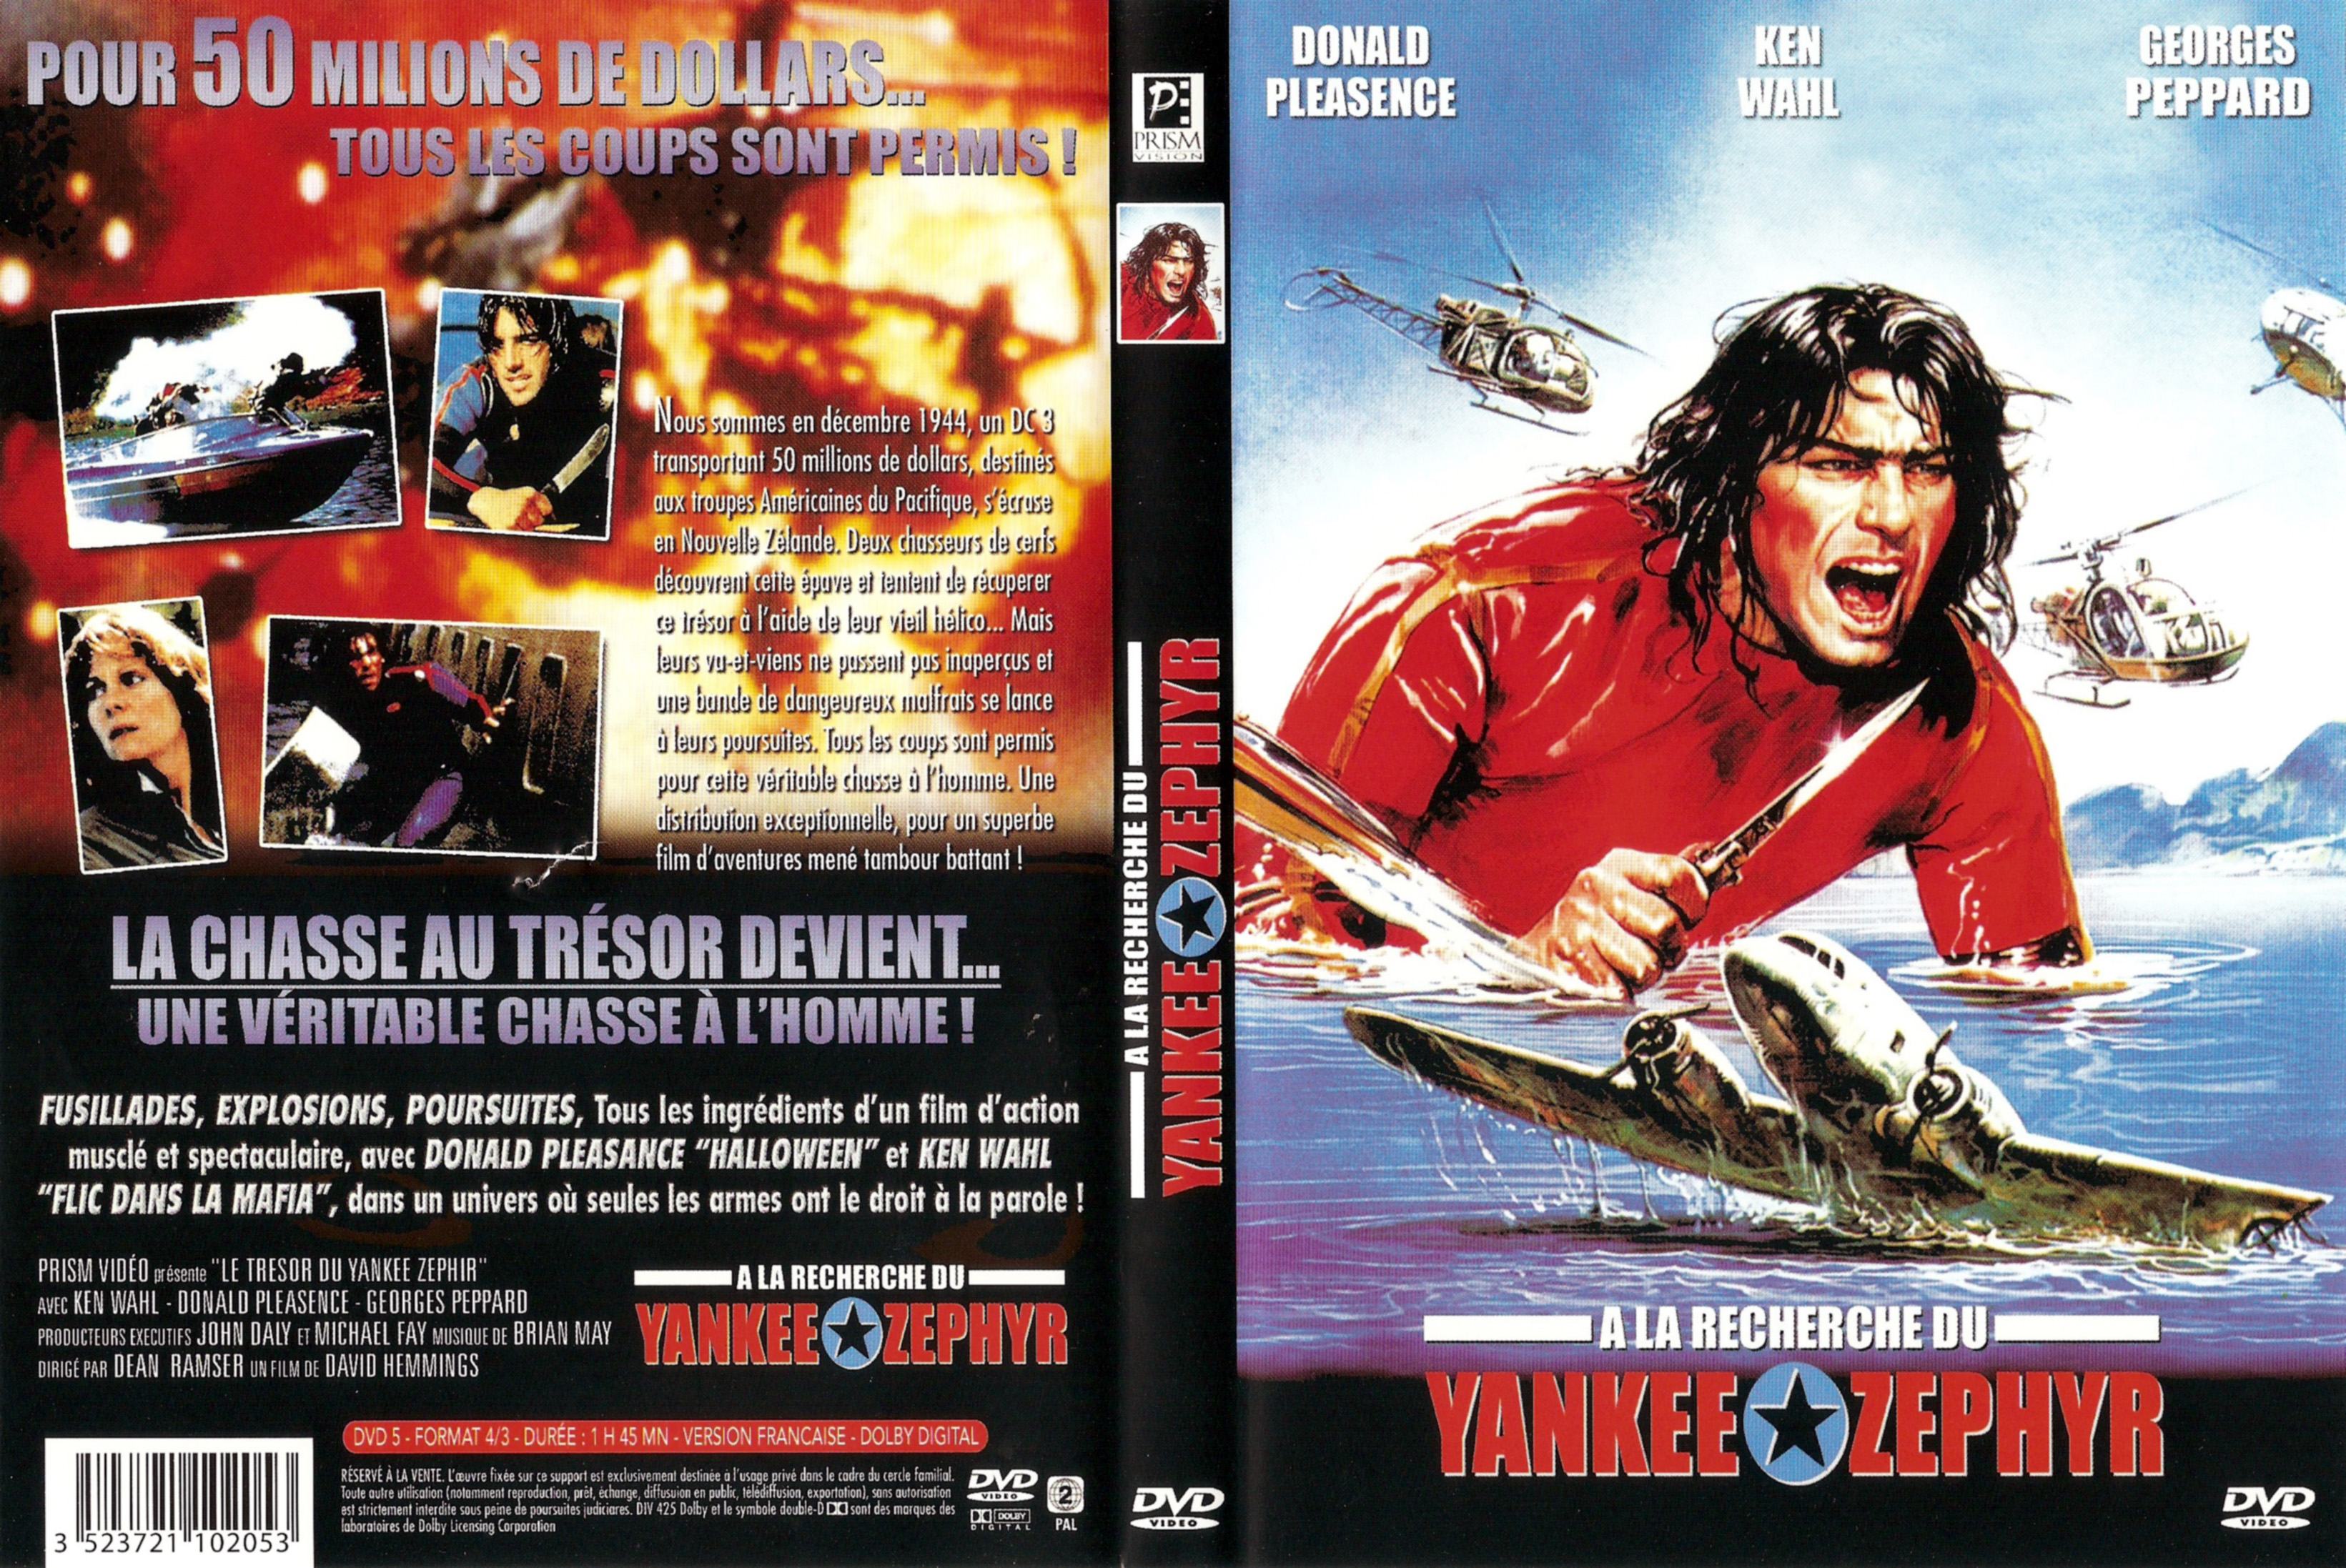 Jaquette DVD A la recherche du yankee zephir